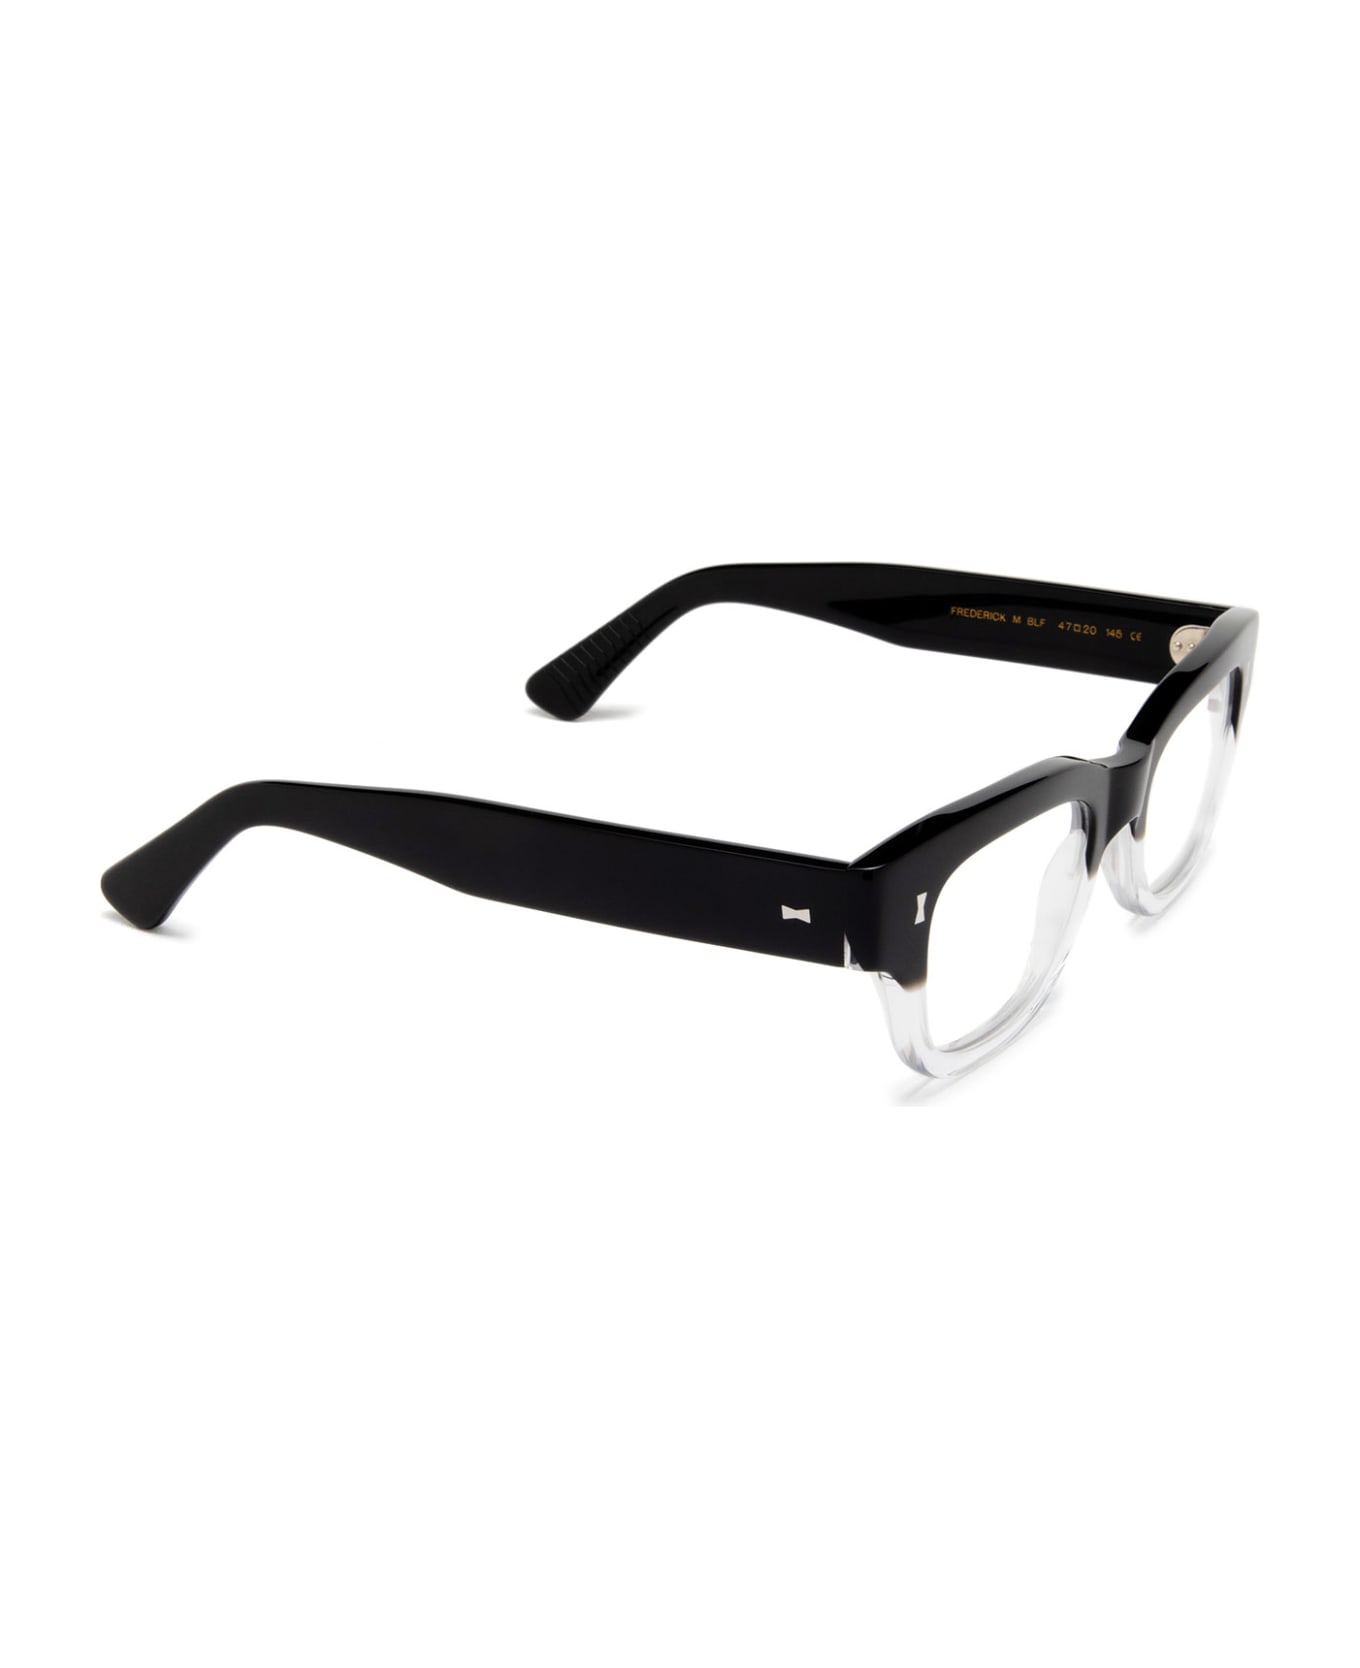 Cubitts Frederick Black Fade Glasses - Black Fade アイウェア